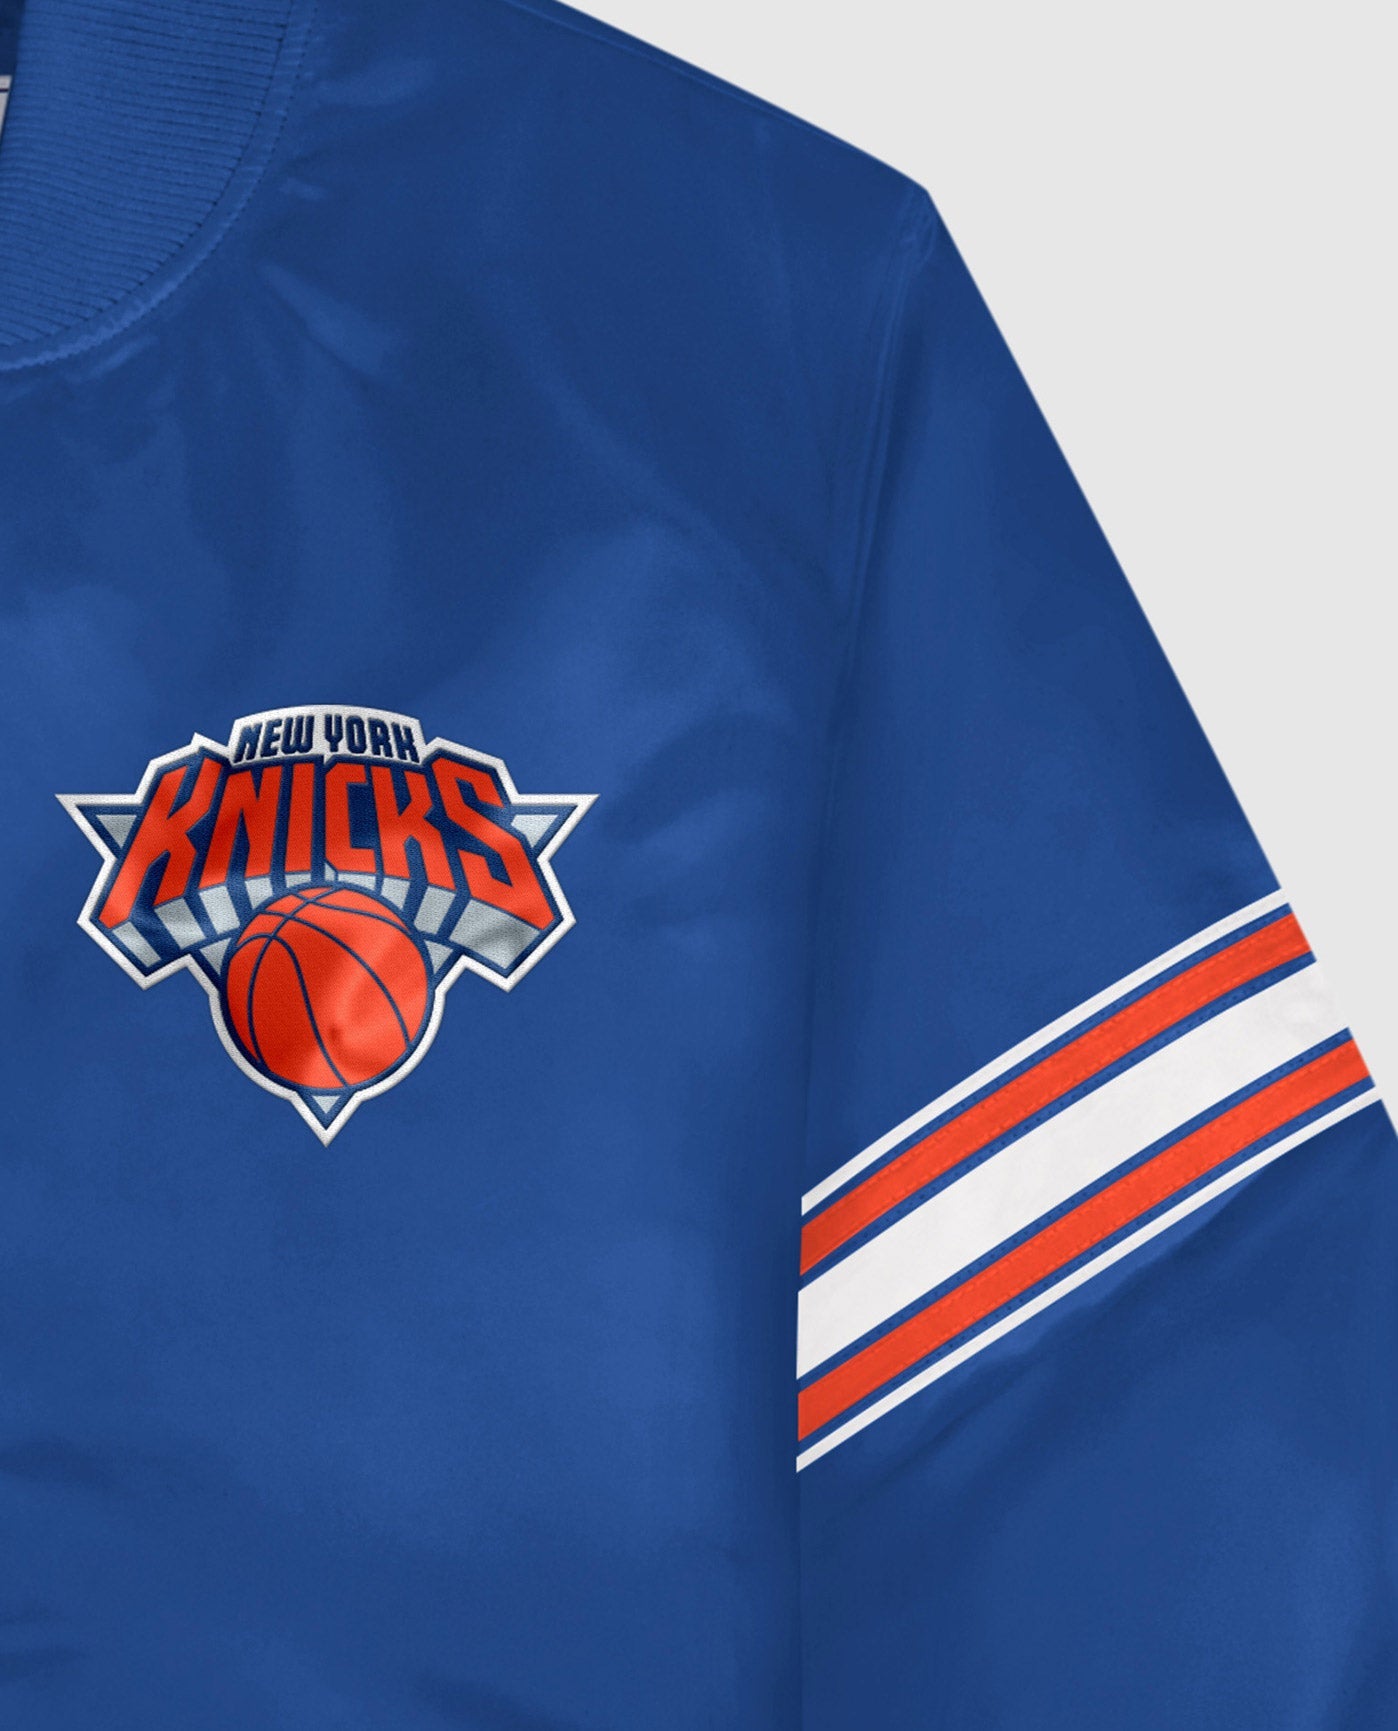 New York Knicks Nike Courtside Half-Snap Jacket - Blue